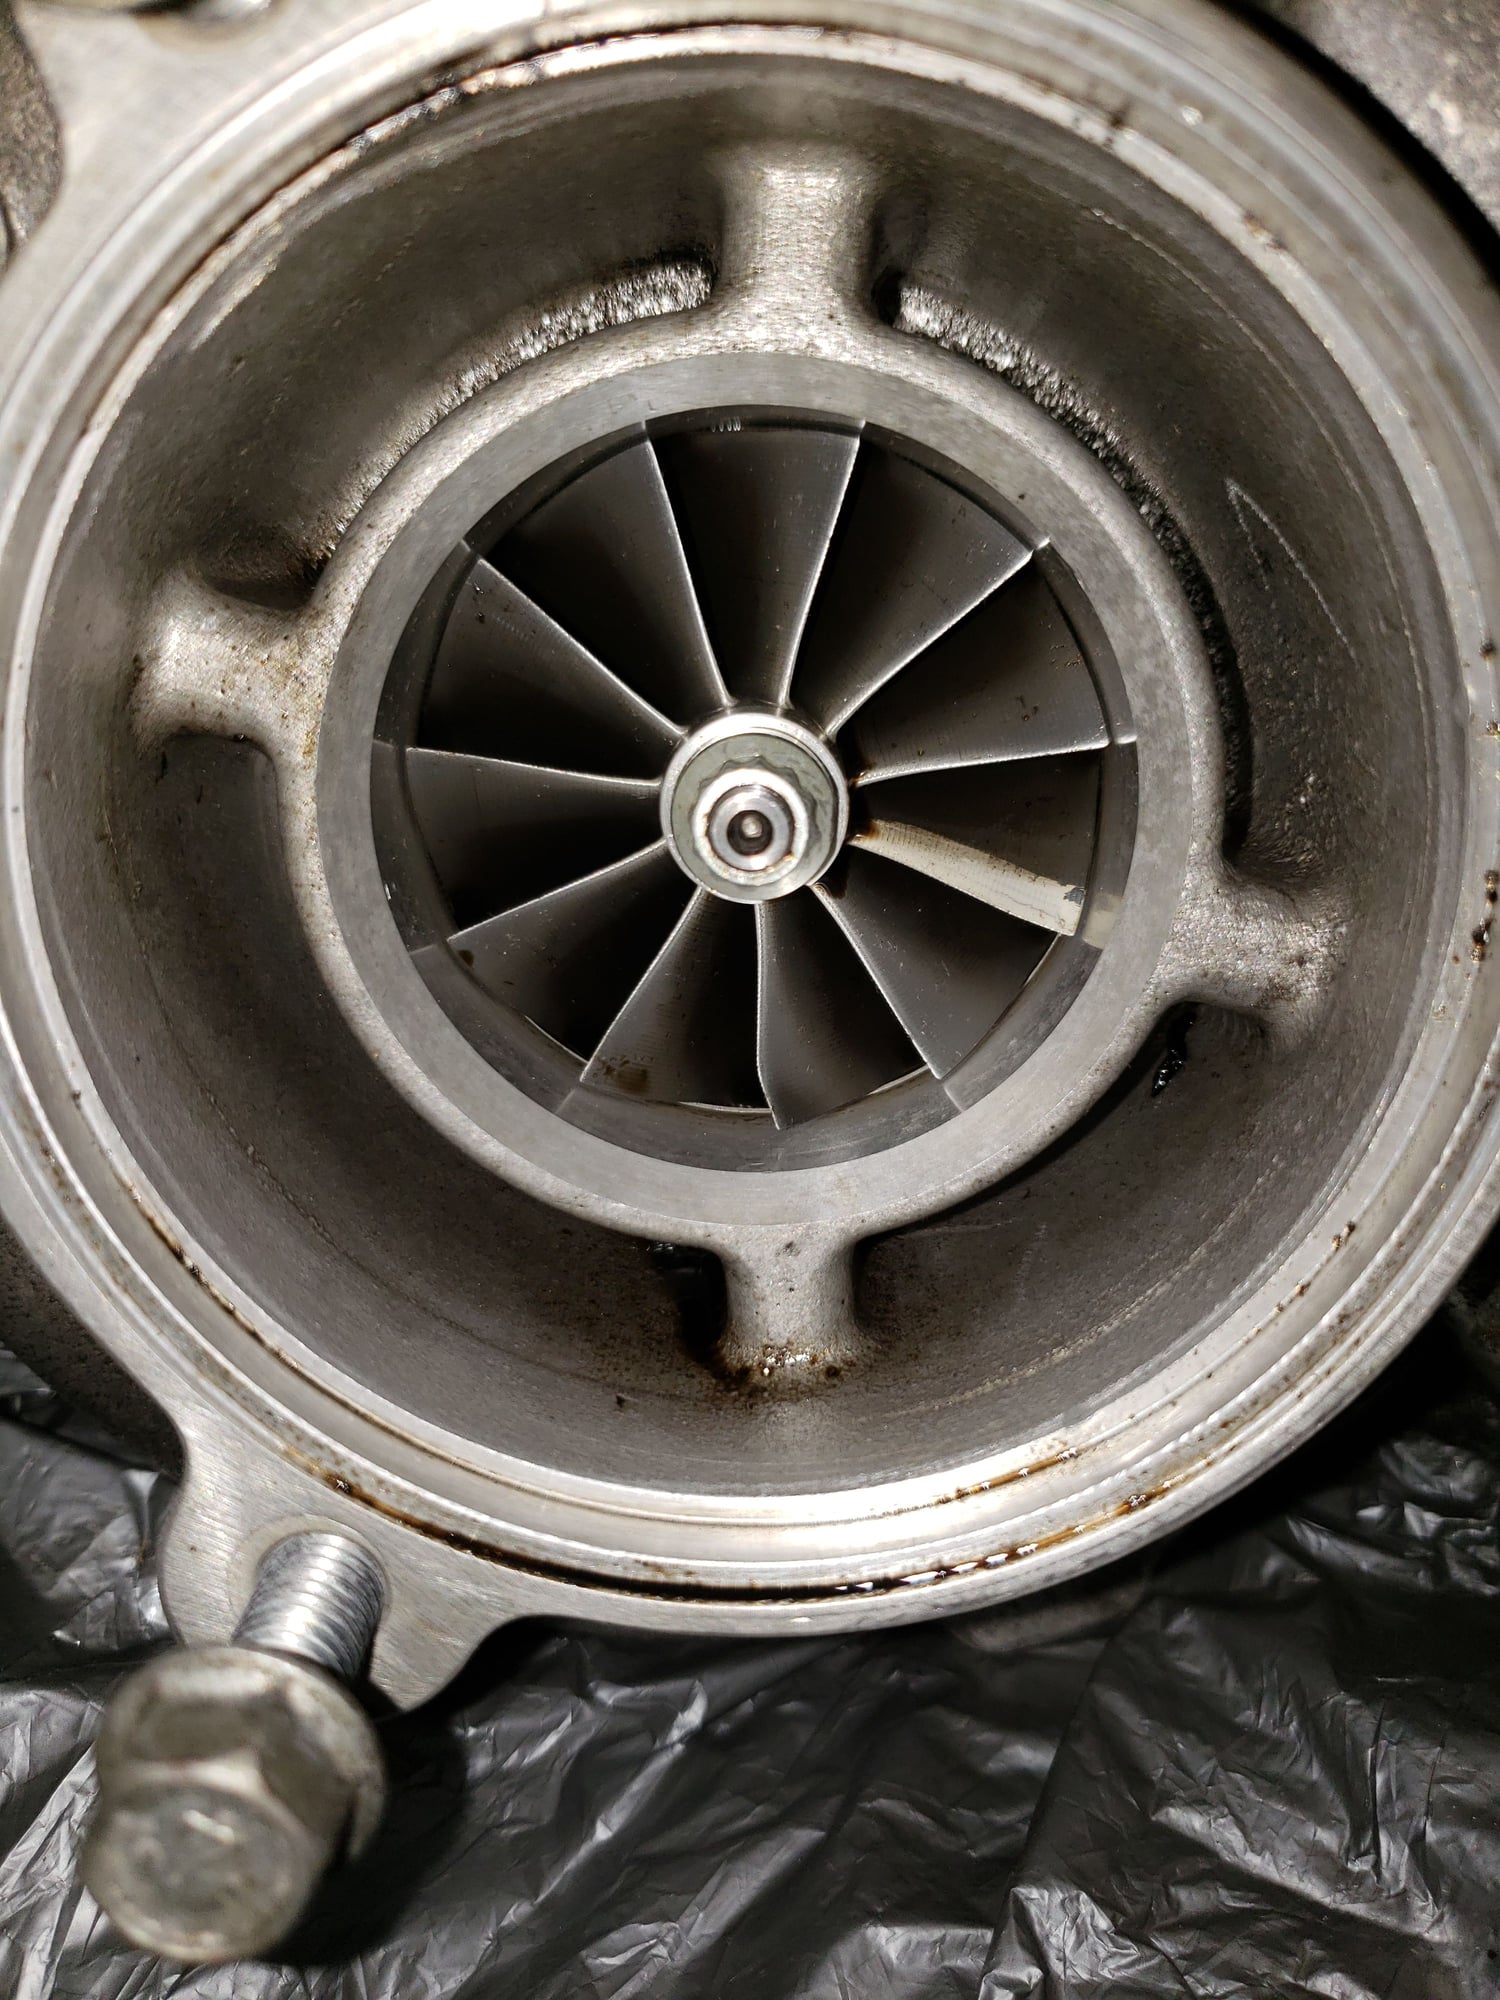 Engine - Power Adders - Used ATP Garrett GTX3076R needs compressor wheel and rebuild - Used - 2008 to 2015 Mitsubishi Lancer Evolution - Queensbury, NY 12804, United States